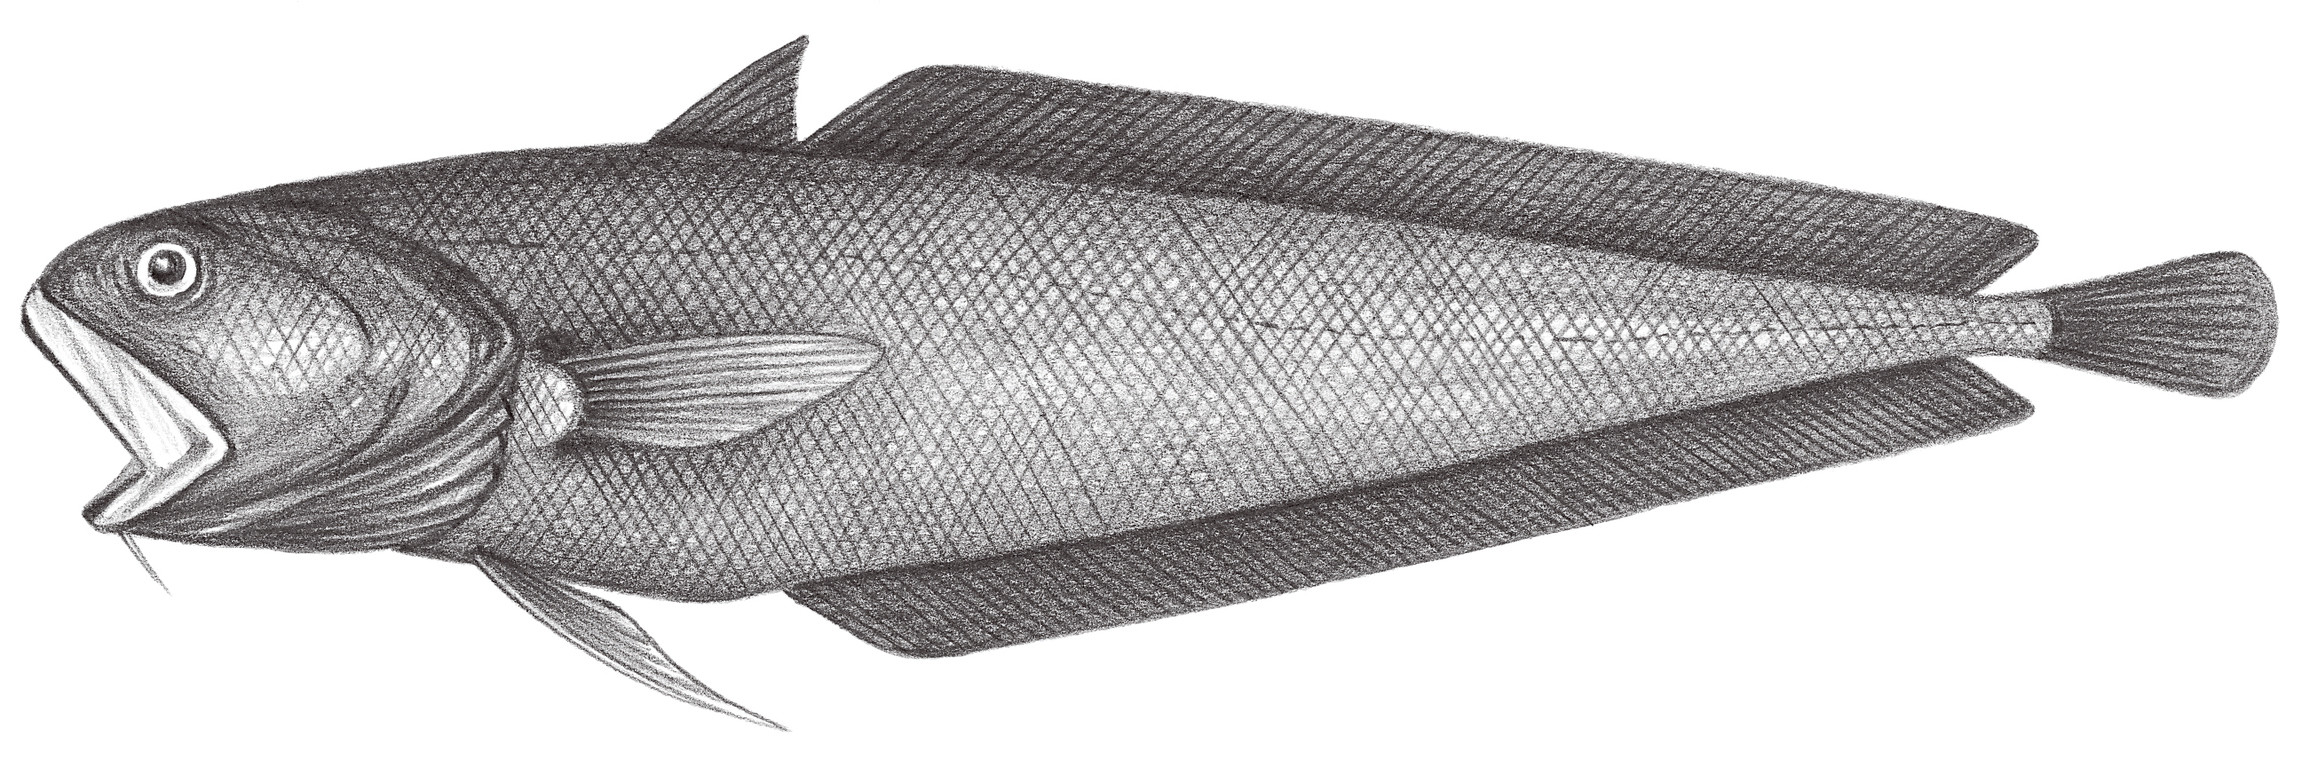 610.	黑鰭小褐鱈 Physiculus nigropinnis Okamura & Amaoka, 1982